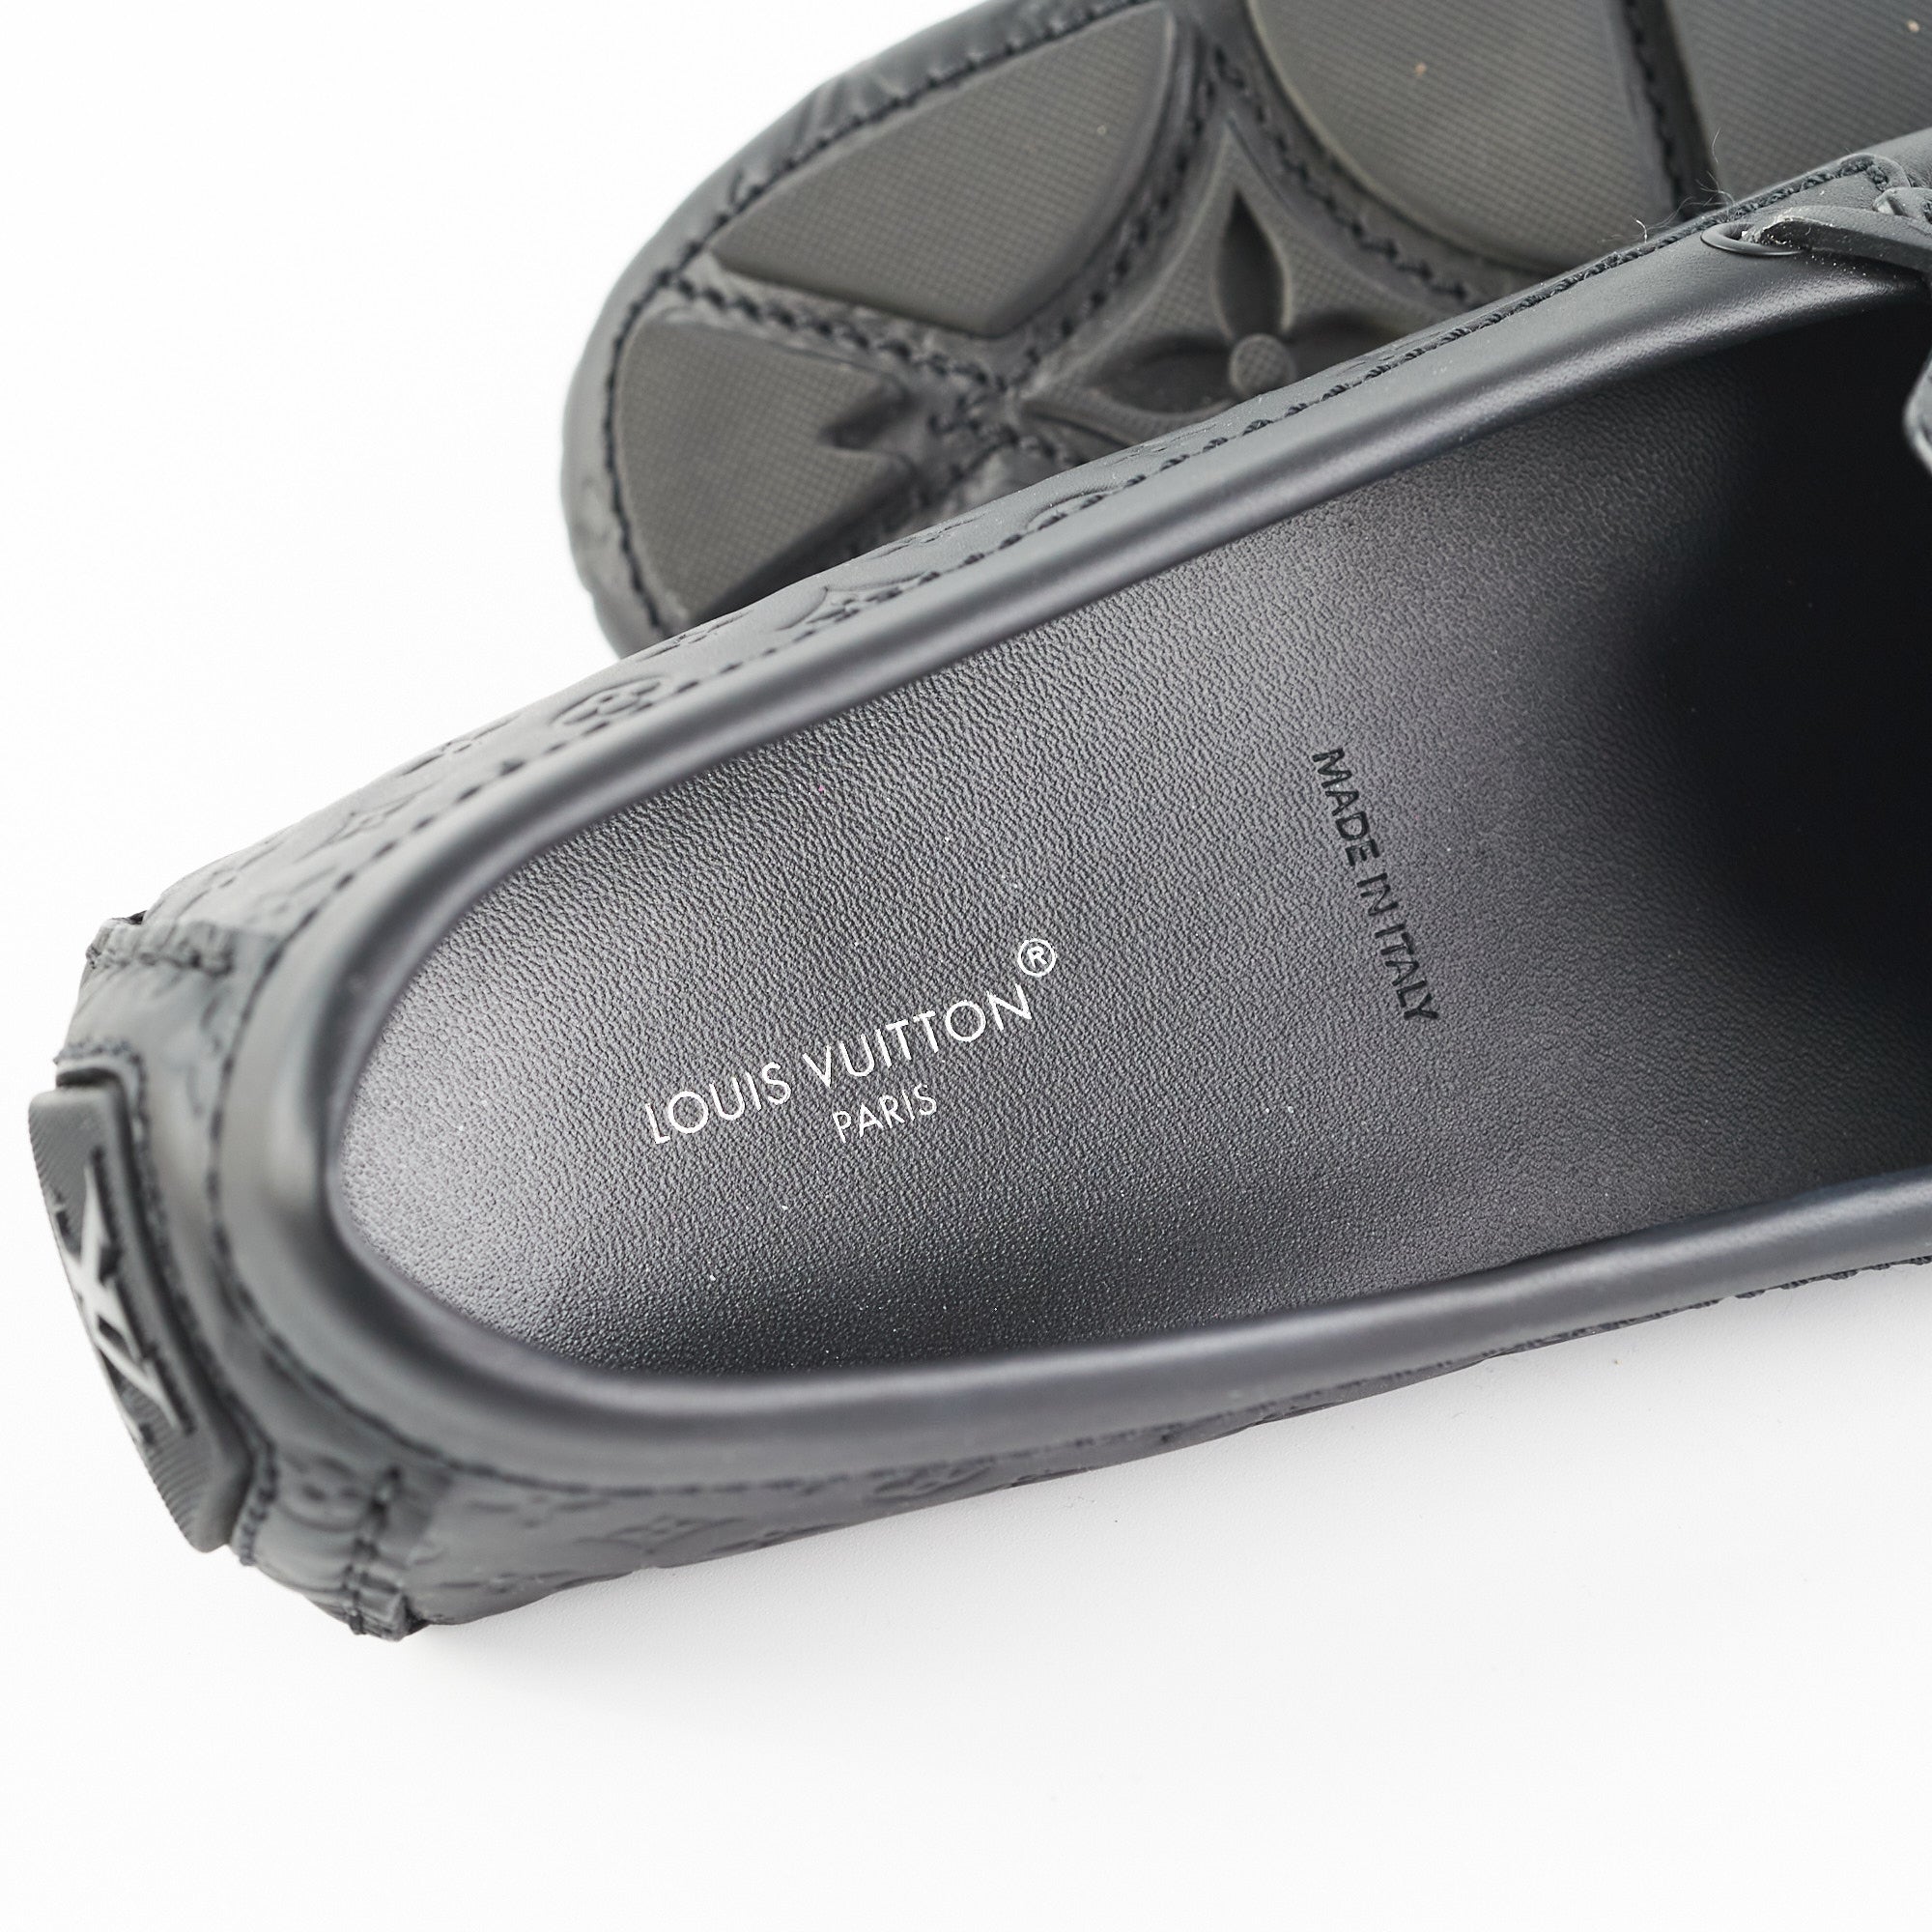 LOUIS VUITTON Maroon/Cassis Gloria EPI Loafer Flats Shoes ND 0153 EU 39.5  US 9